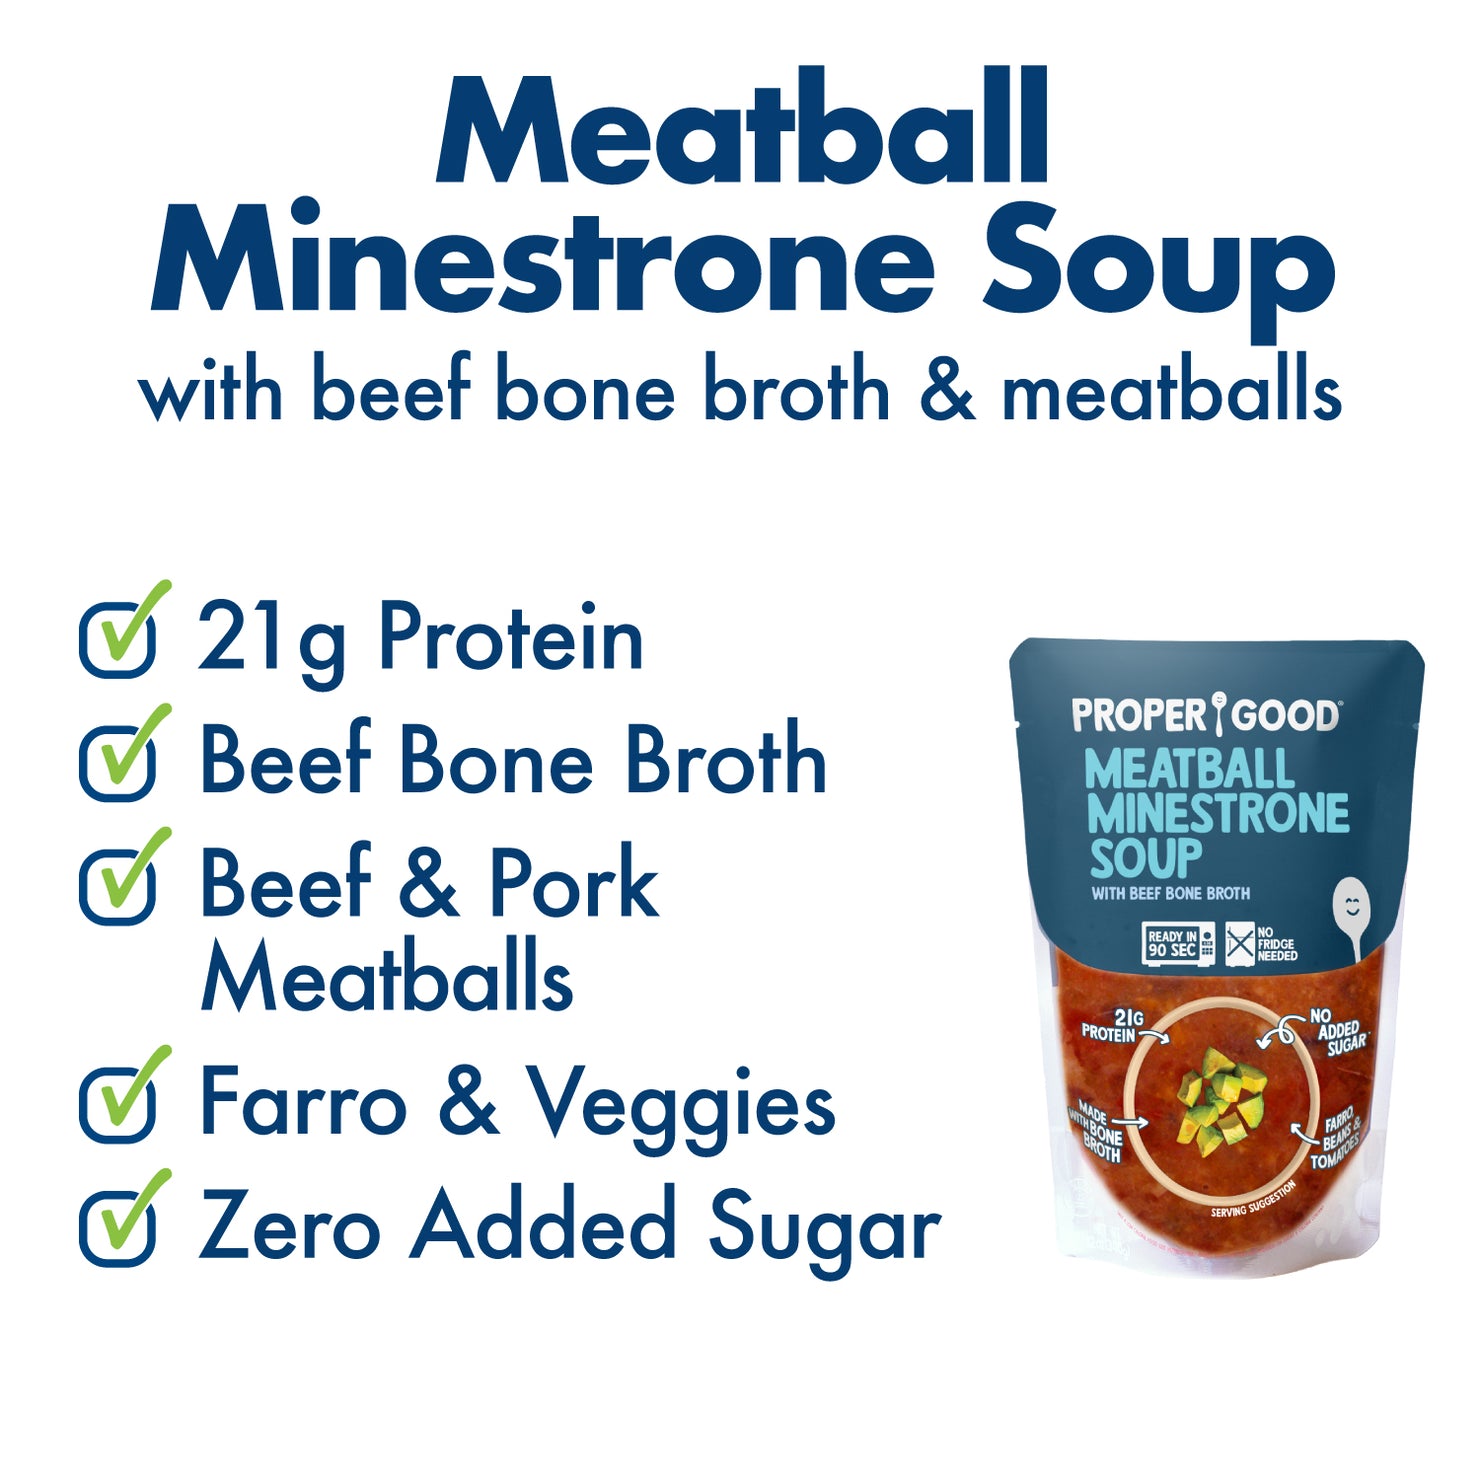 Meatball Minestrone Soup Benefits - Eat Proper Good